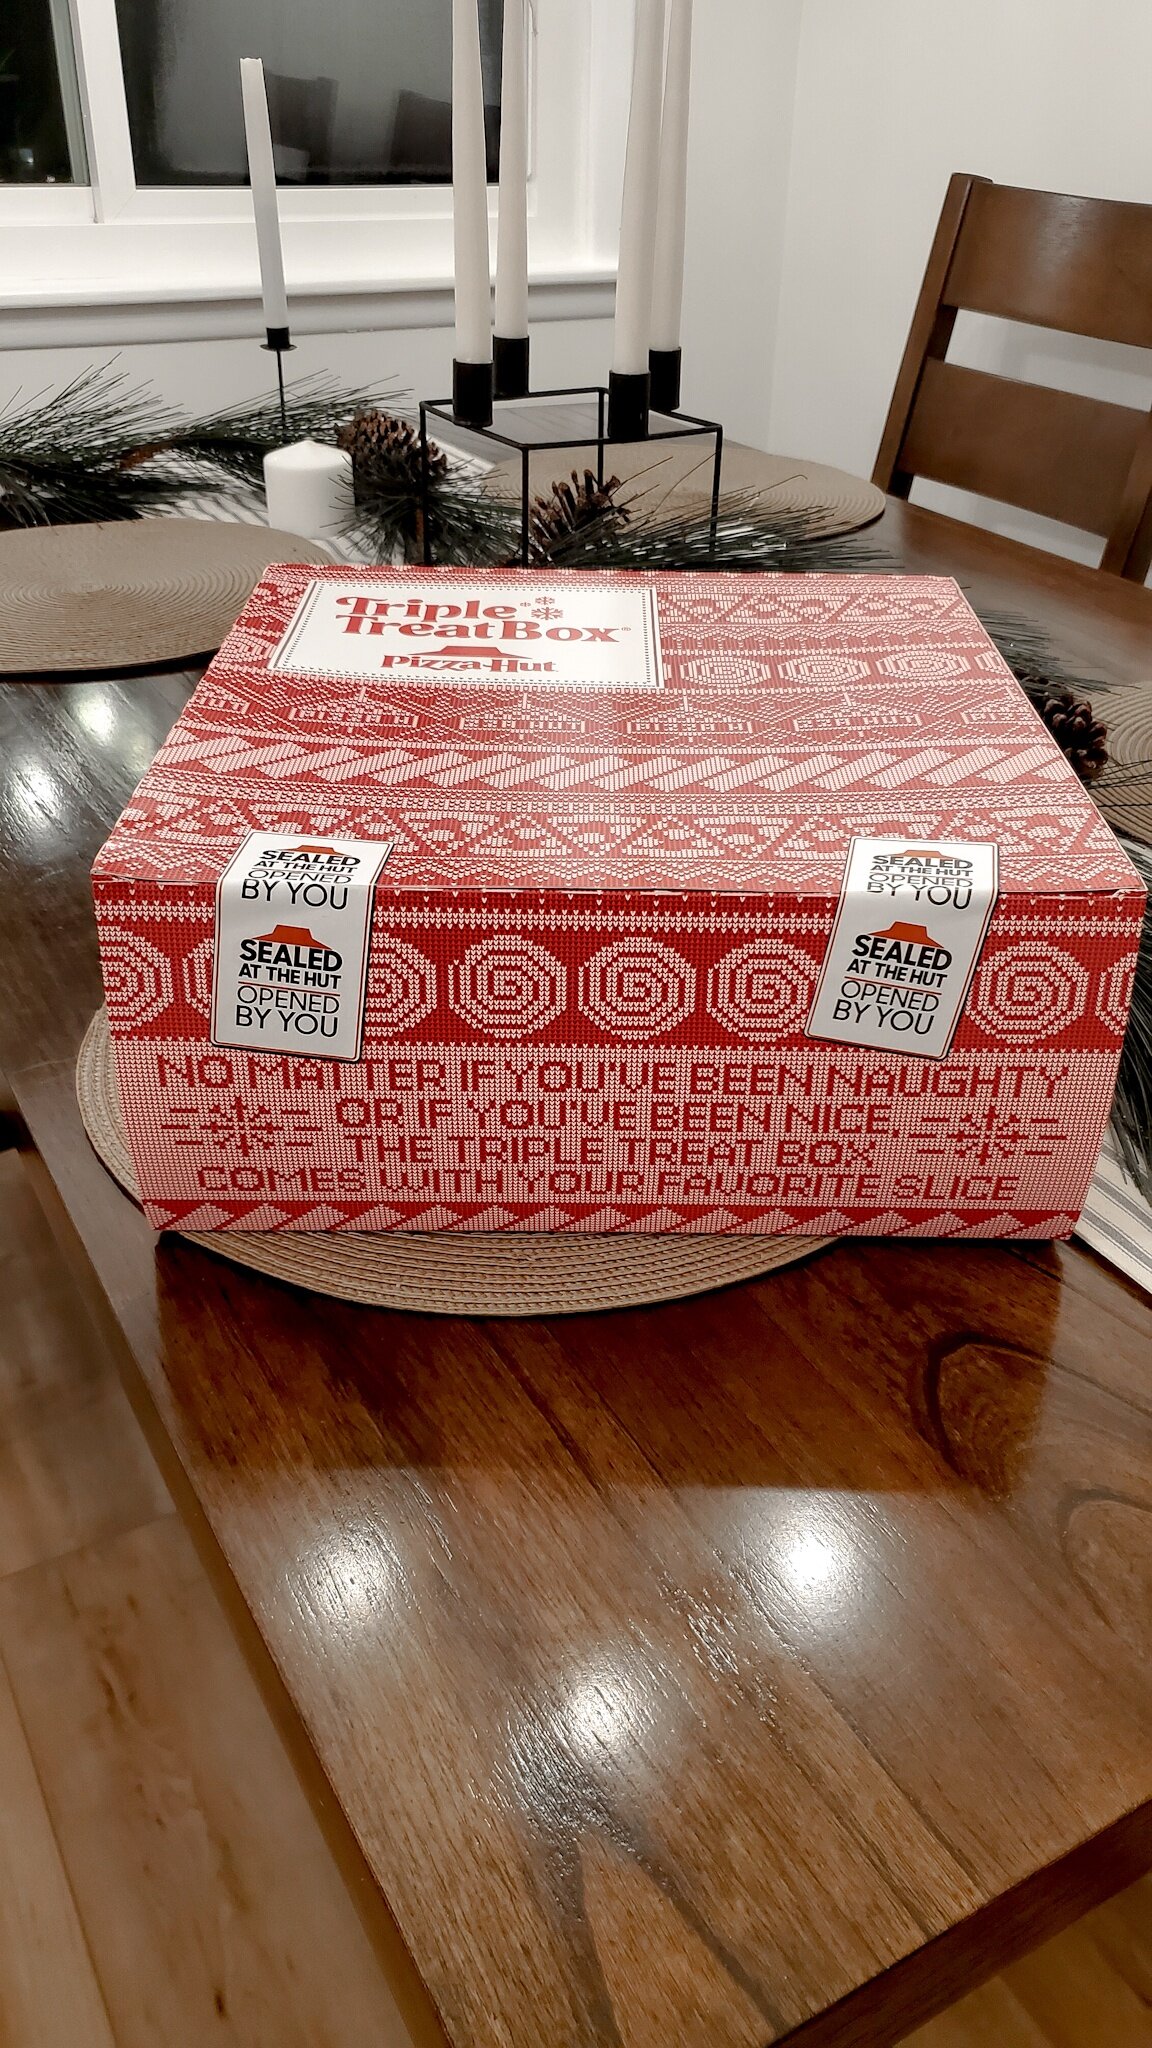 I review the Three Pizza Box at Pizza Hut #pizza #keywest